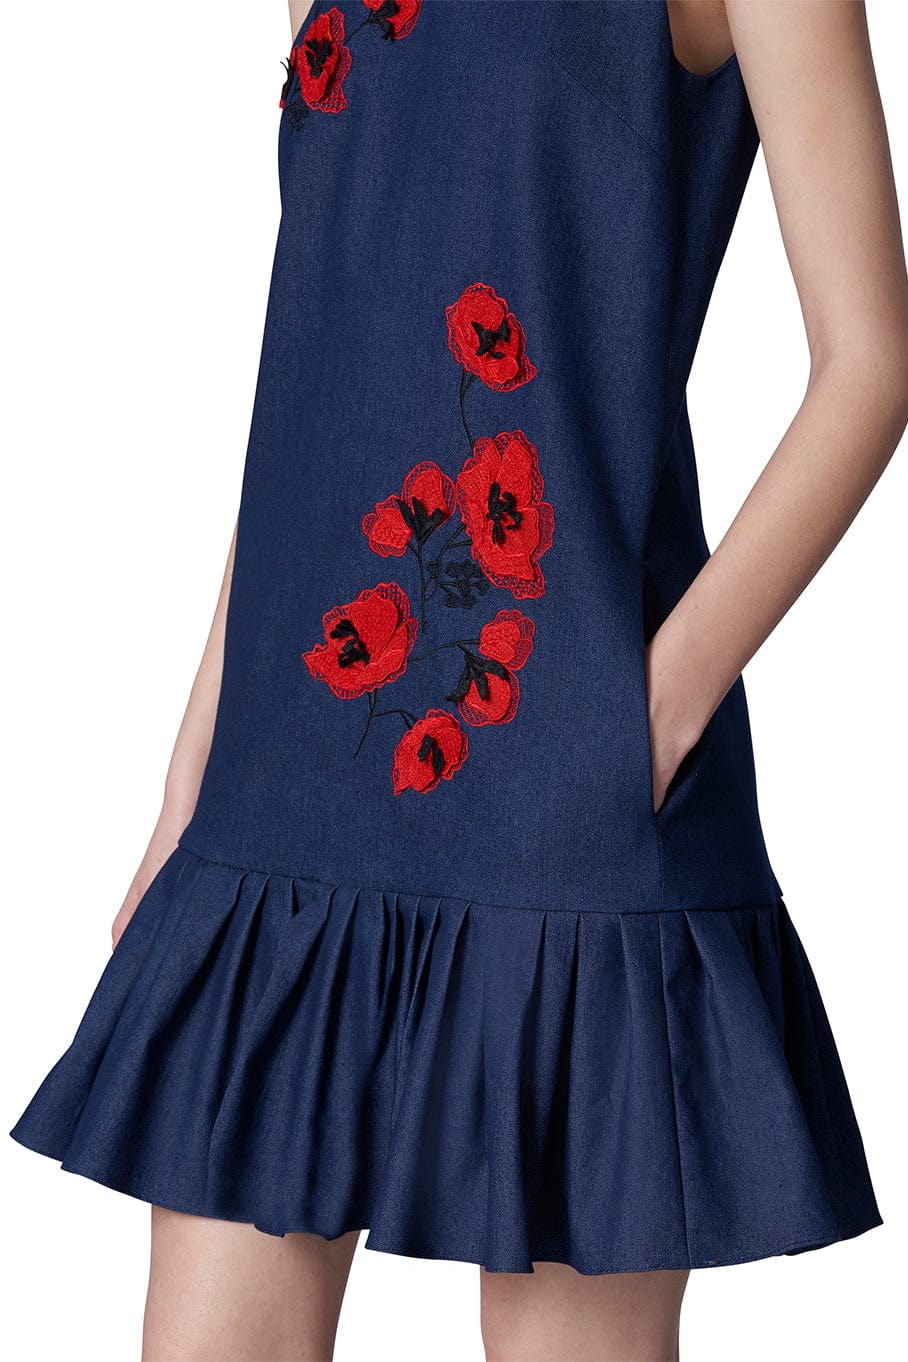 Embroidered Sleeveless Shift Dress CLOTHINGDRESSCASUAL CAROLINA HERRERA   